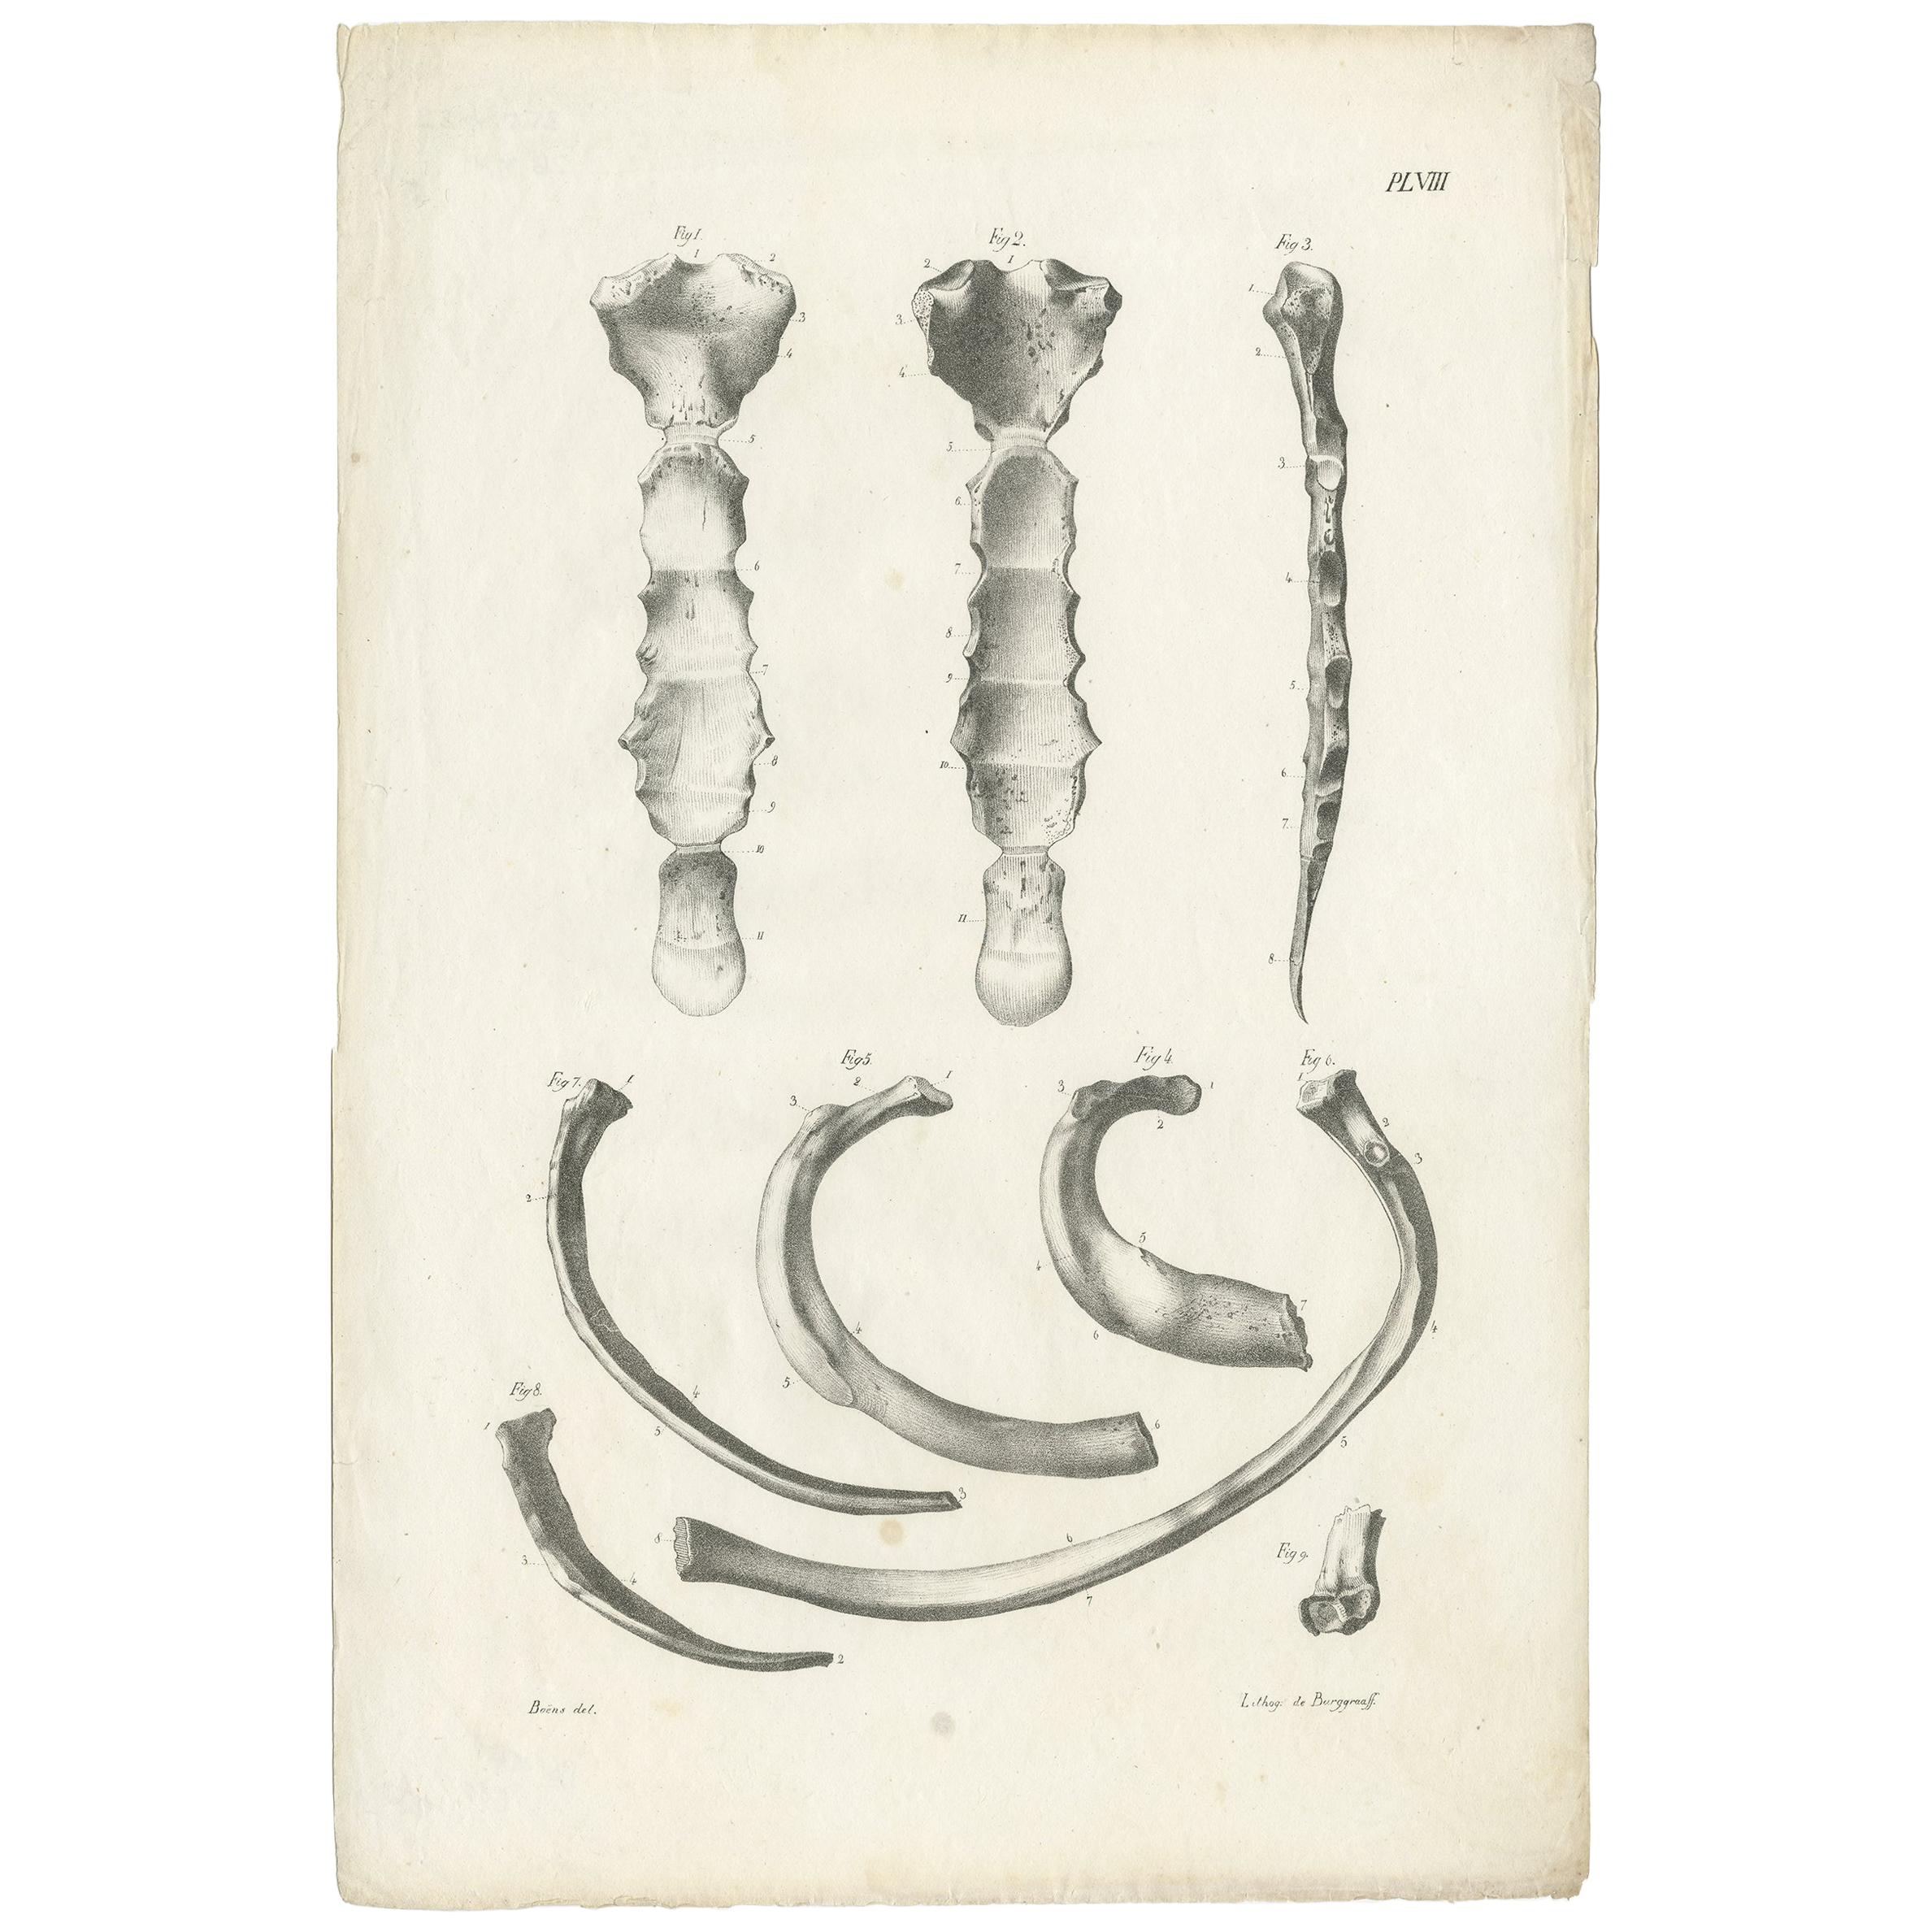 Antique Anatomy / Medical Print of Various Bones by Cloquet, 1821